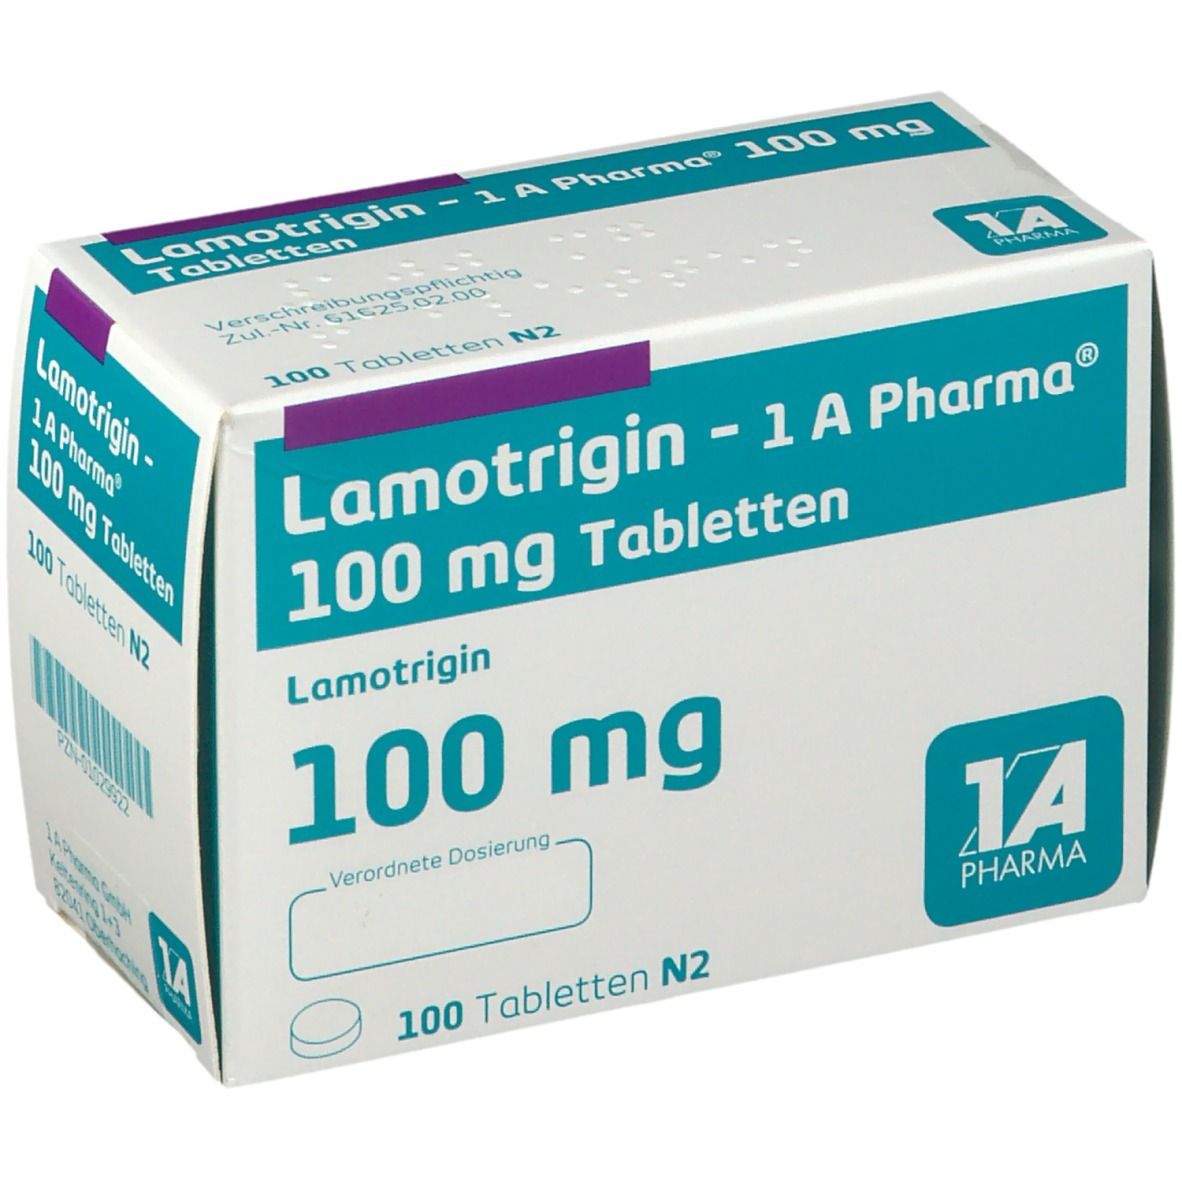 Lamotrigin 1A Pharma® 100Mg